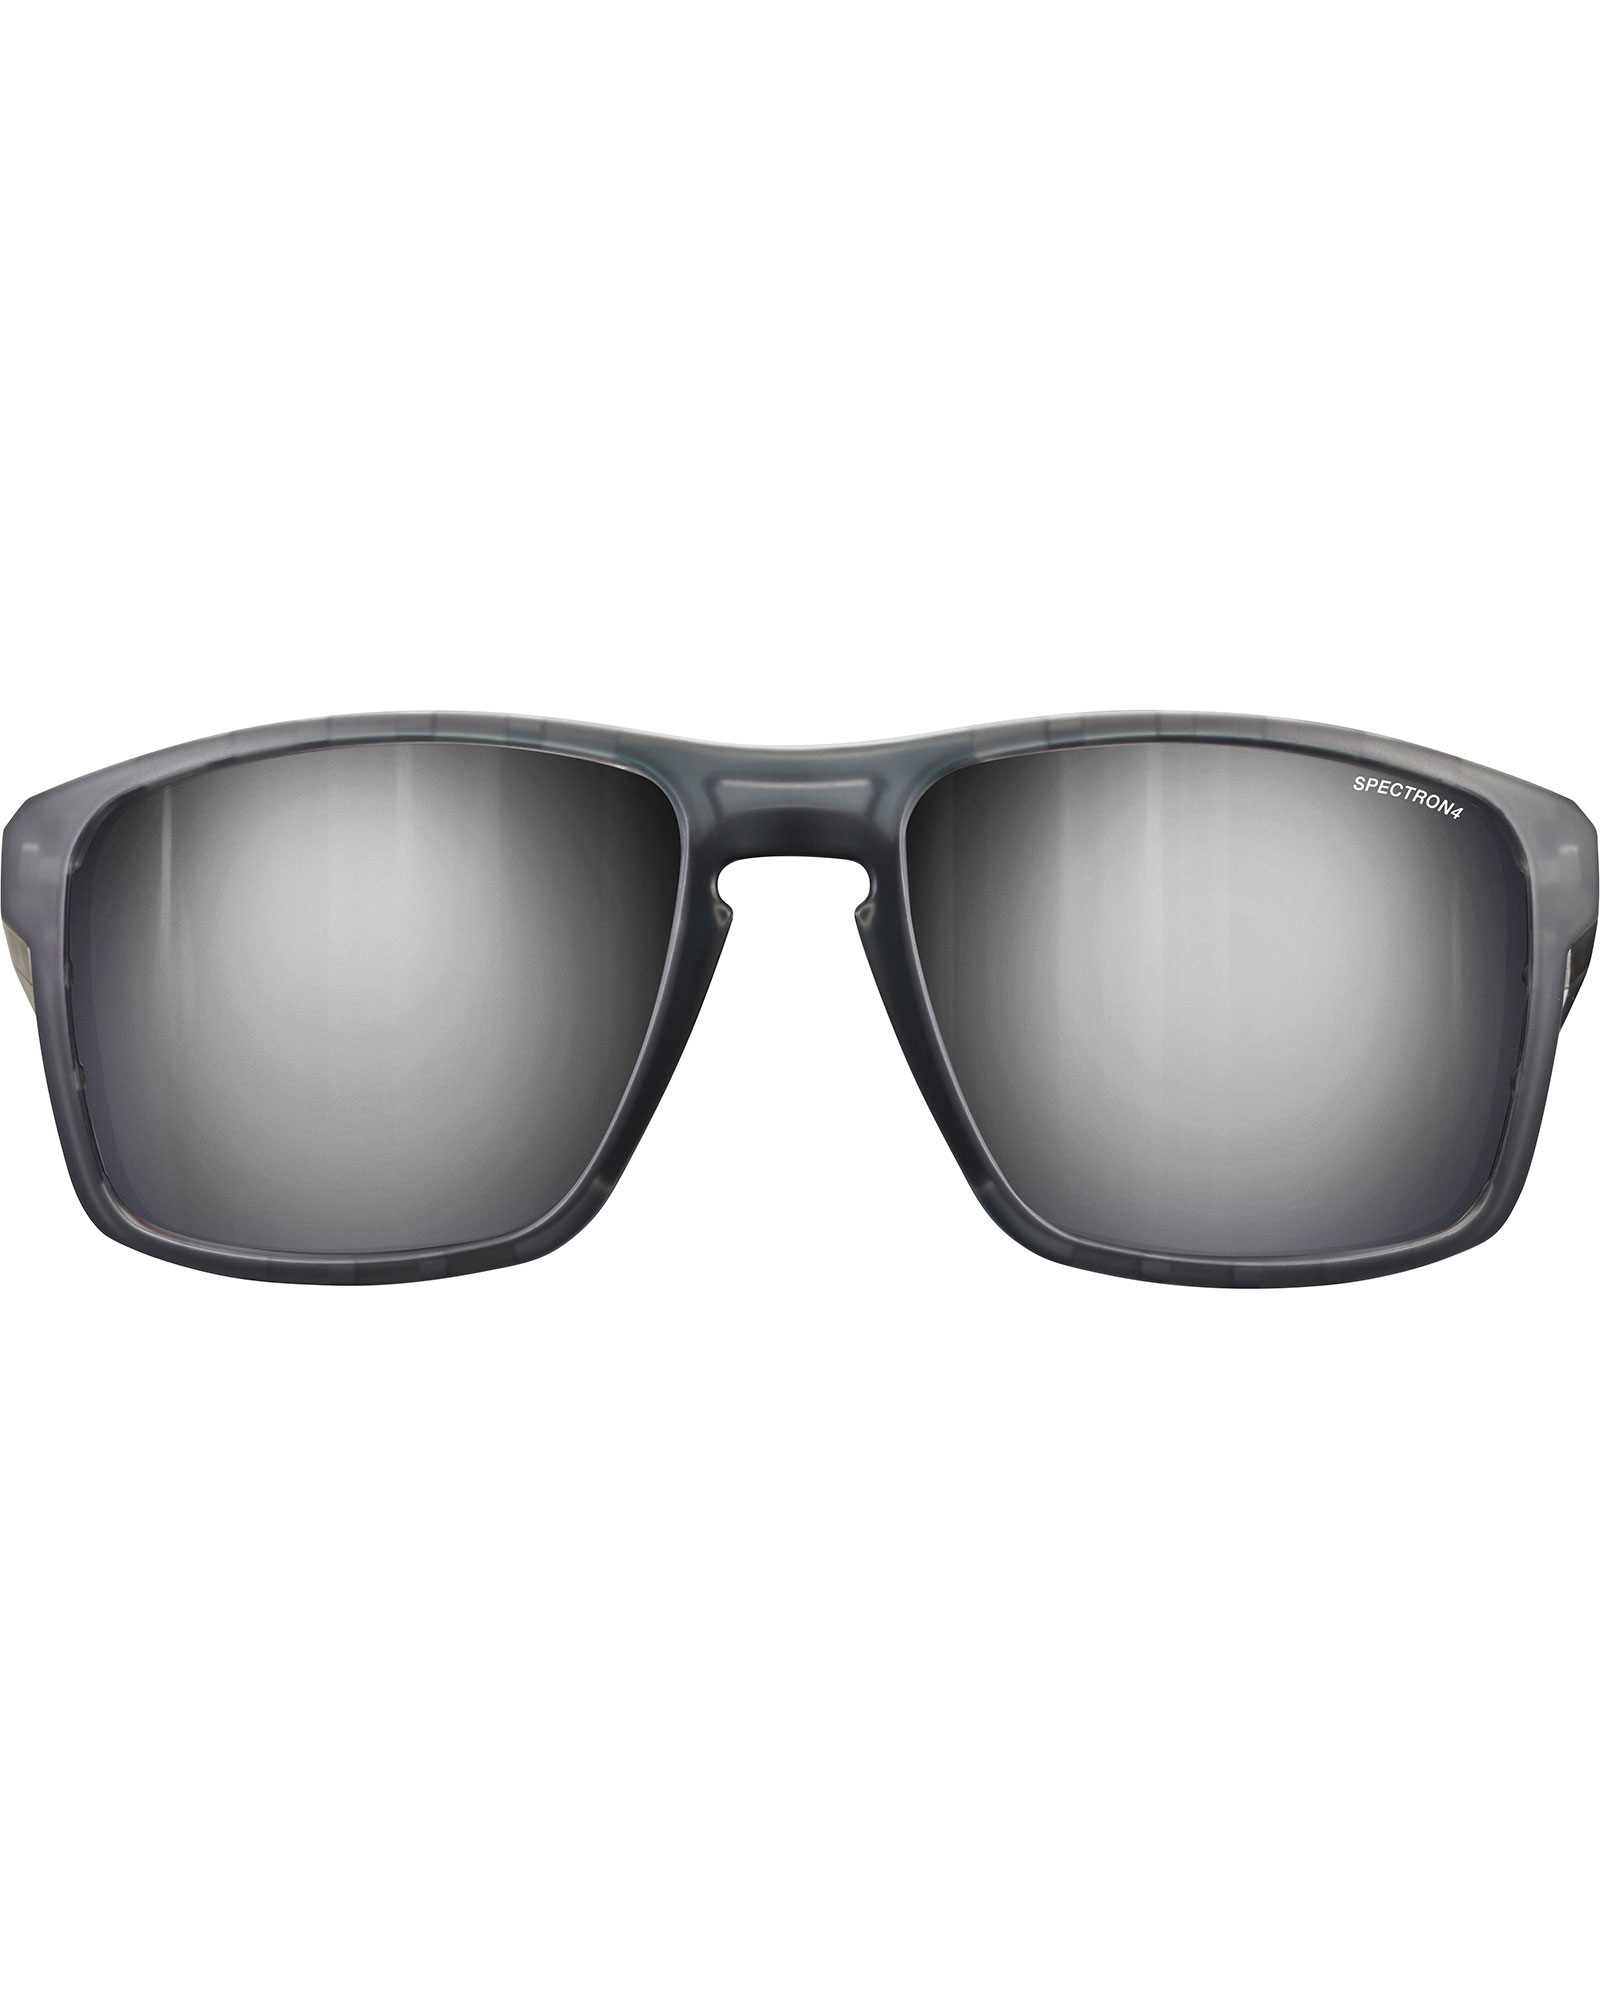 Julbo Shield Spectron 4 Sunglasses - Translucent Black/Black